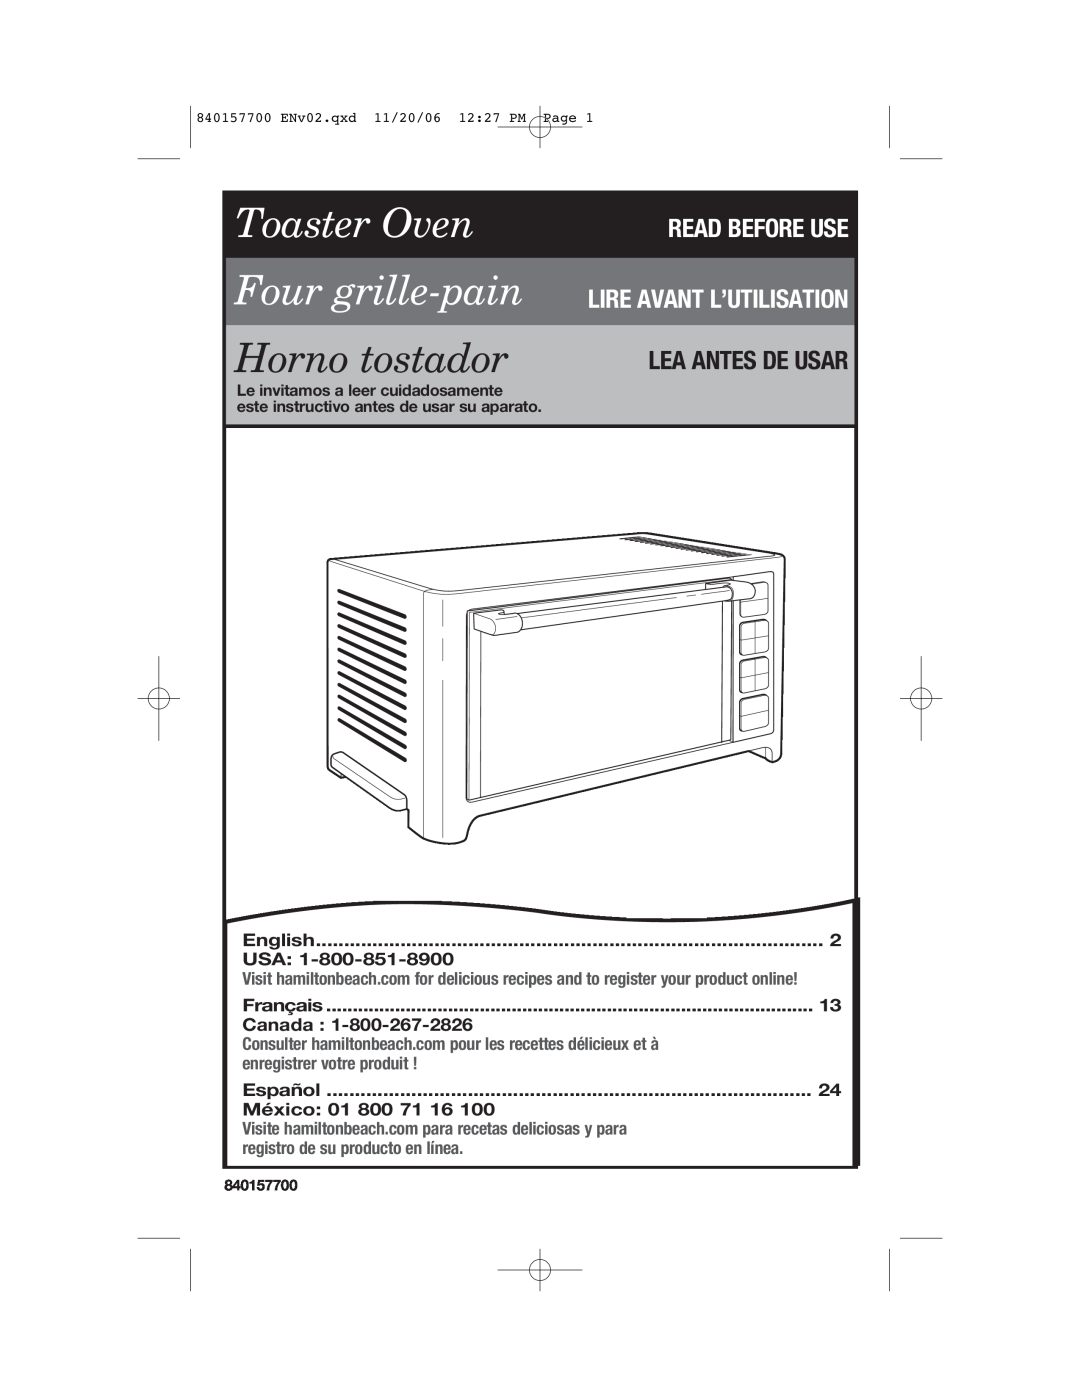 Hamilton Beach 31150C manual English, Usa, Français, Canada, Español, México 01, Toaster Oven Four grille-pain, 840157700 